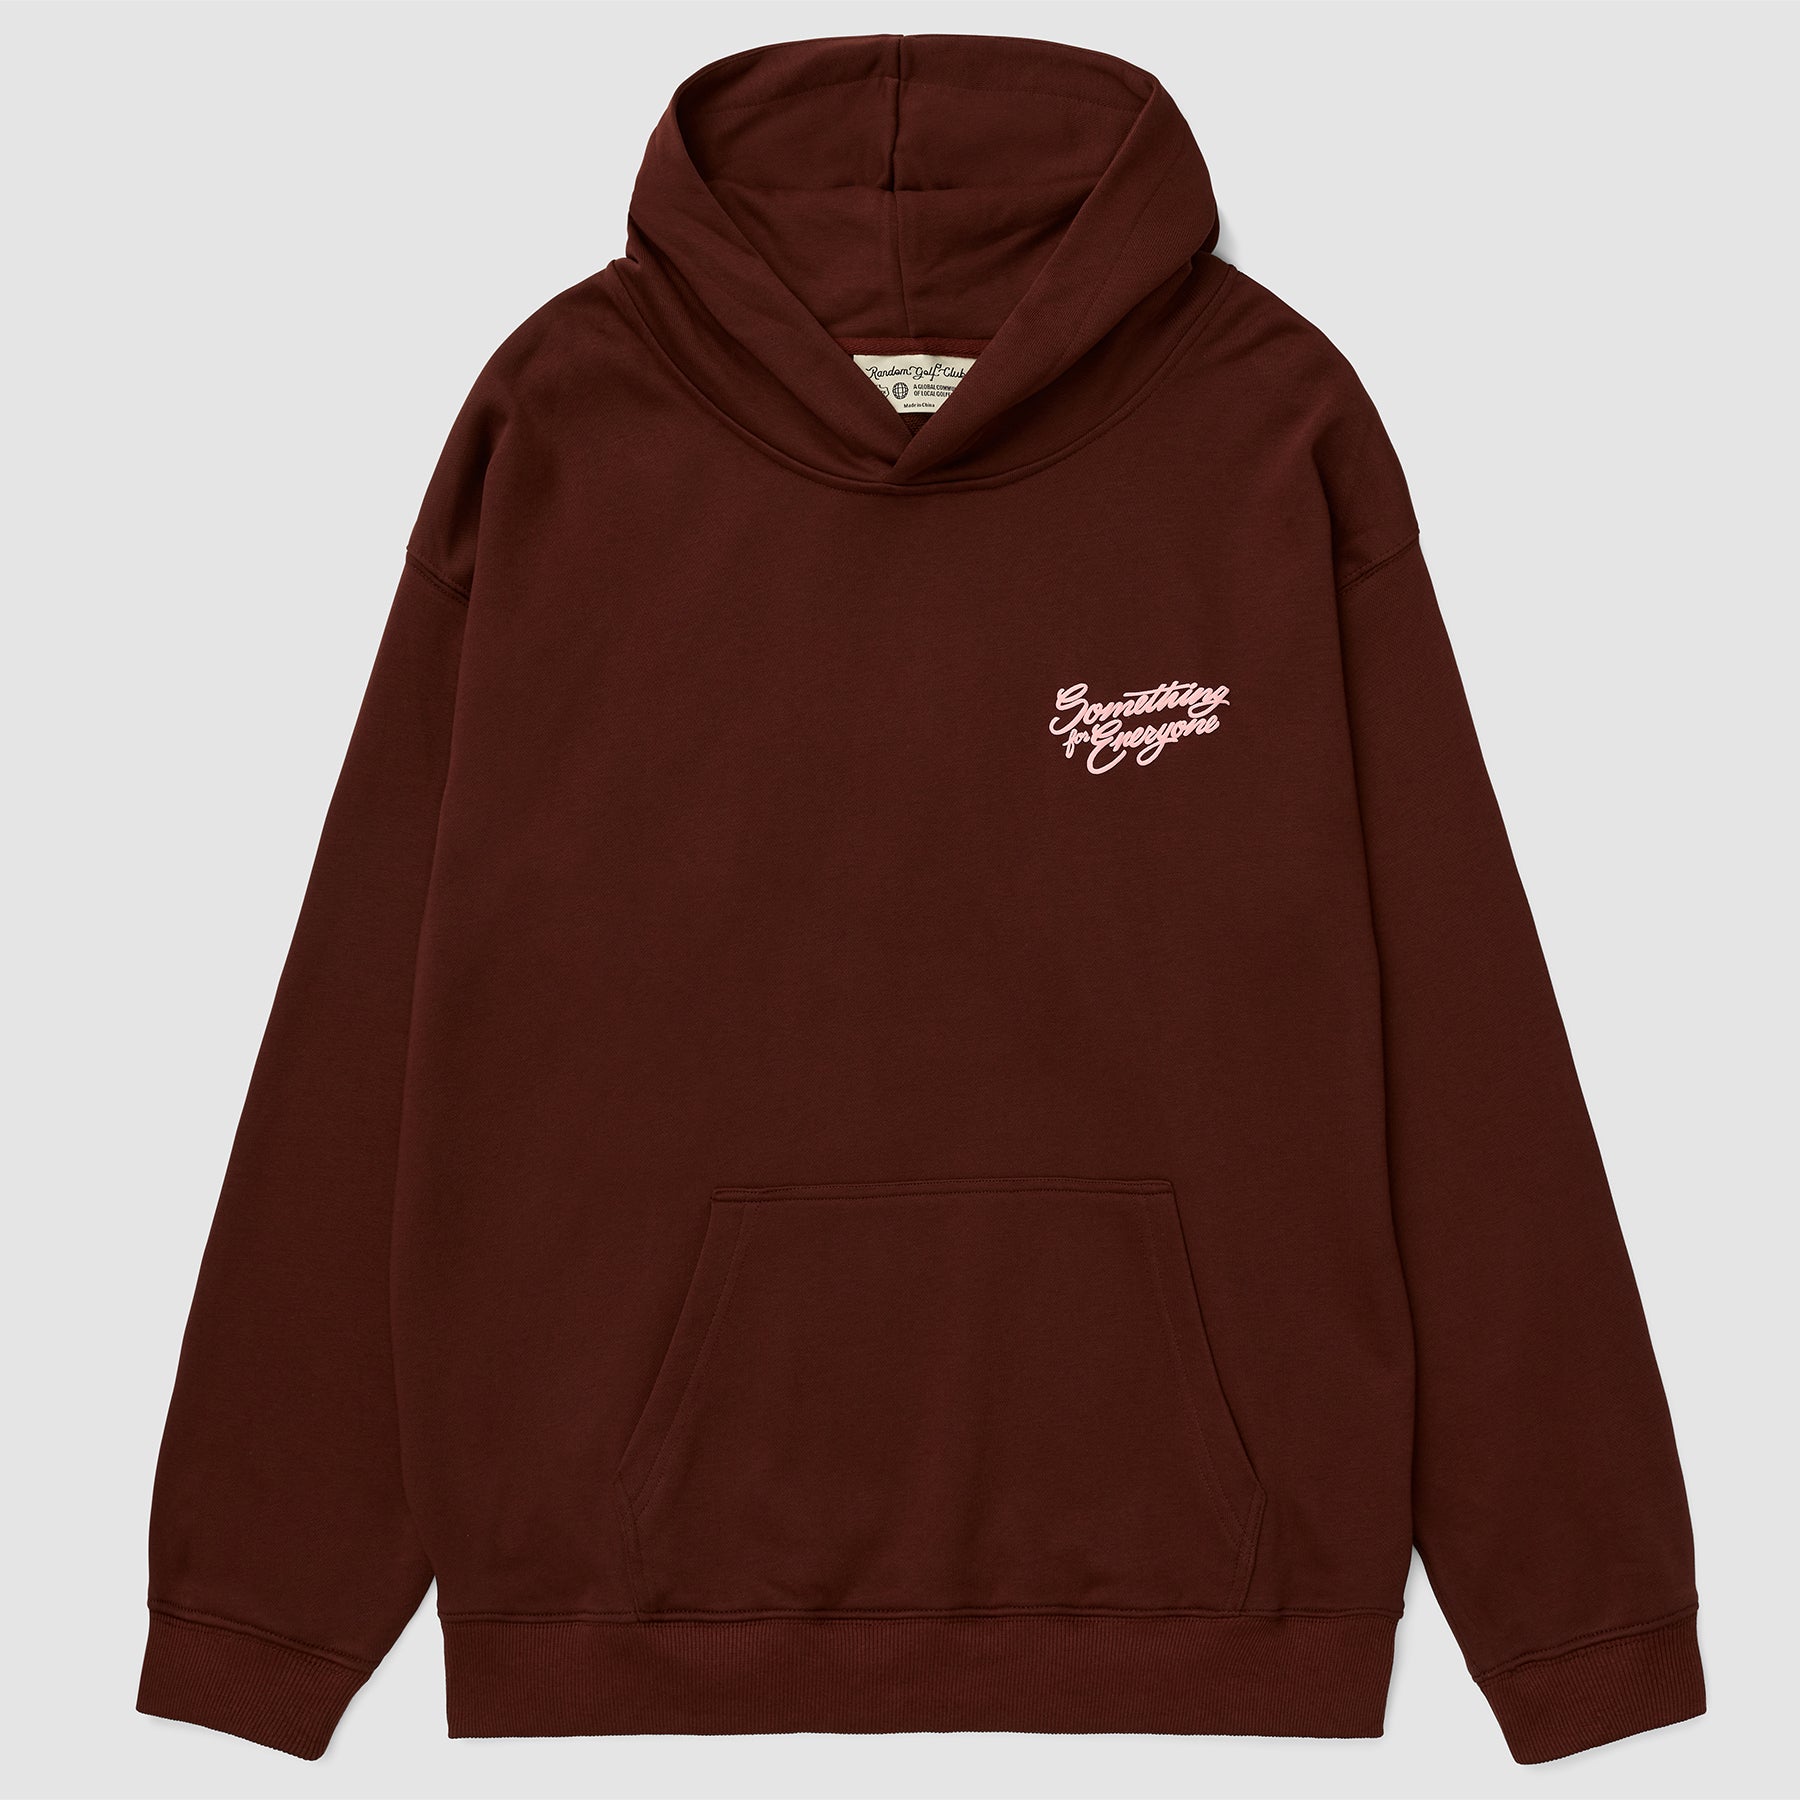 S.F.E Hooded Sweatshirt (Brown)